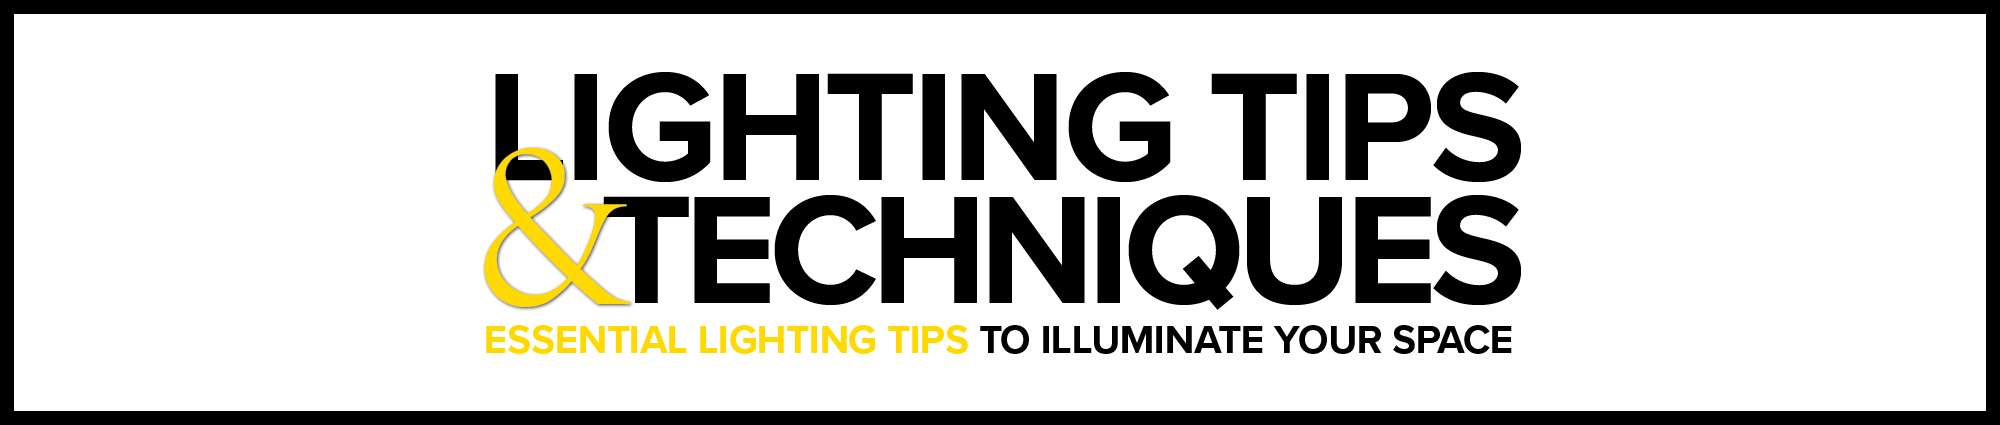 Lighting Tips and Techniques: Choosing LED Light Bulbs